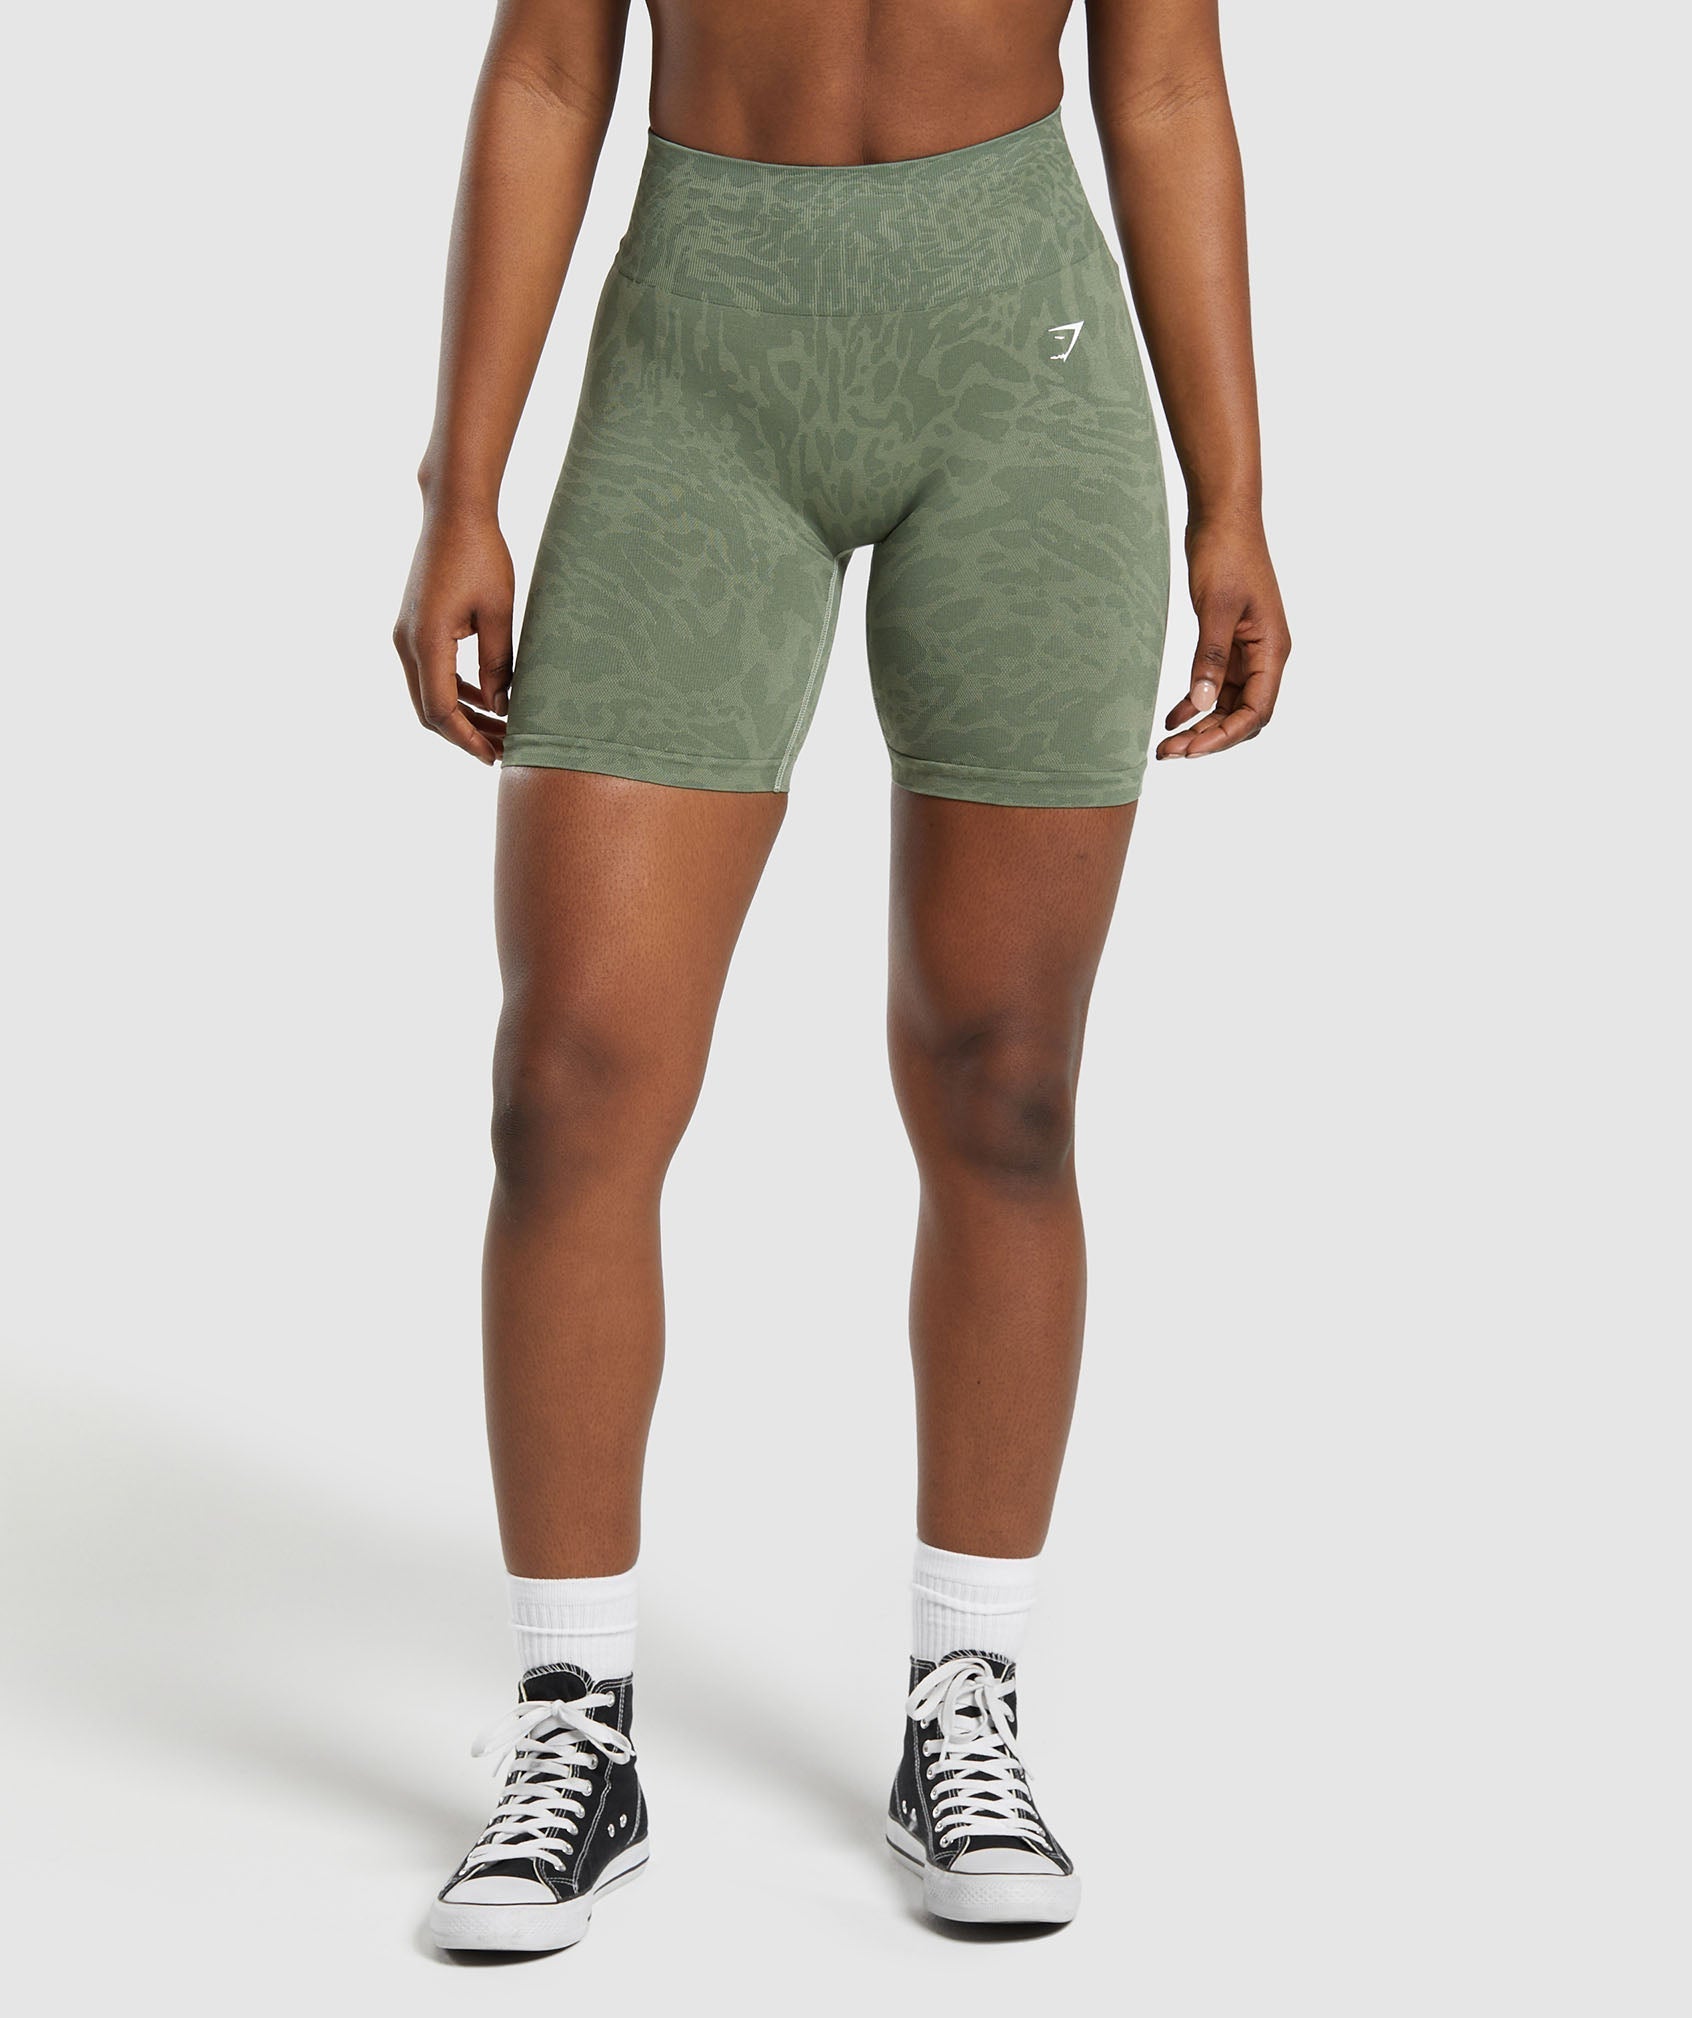 Gymshark Adapt Safari Tight Shorts - Force Green/Faded Green